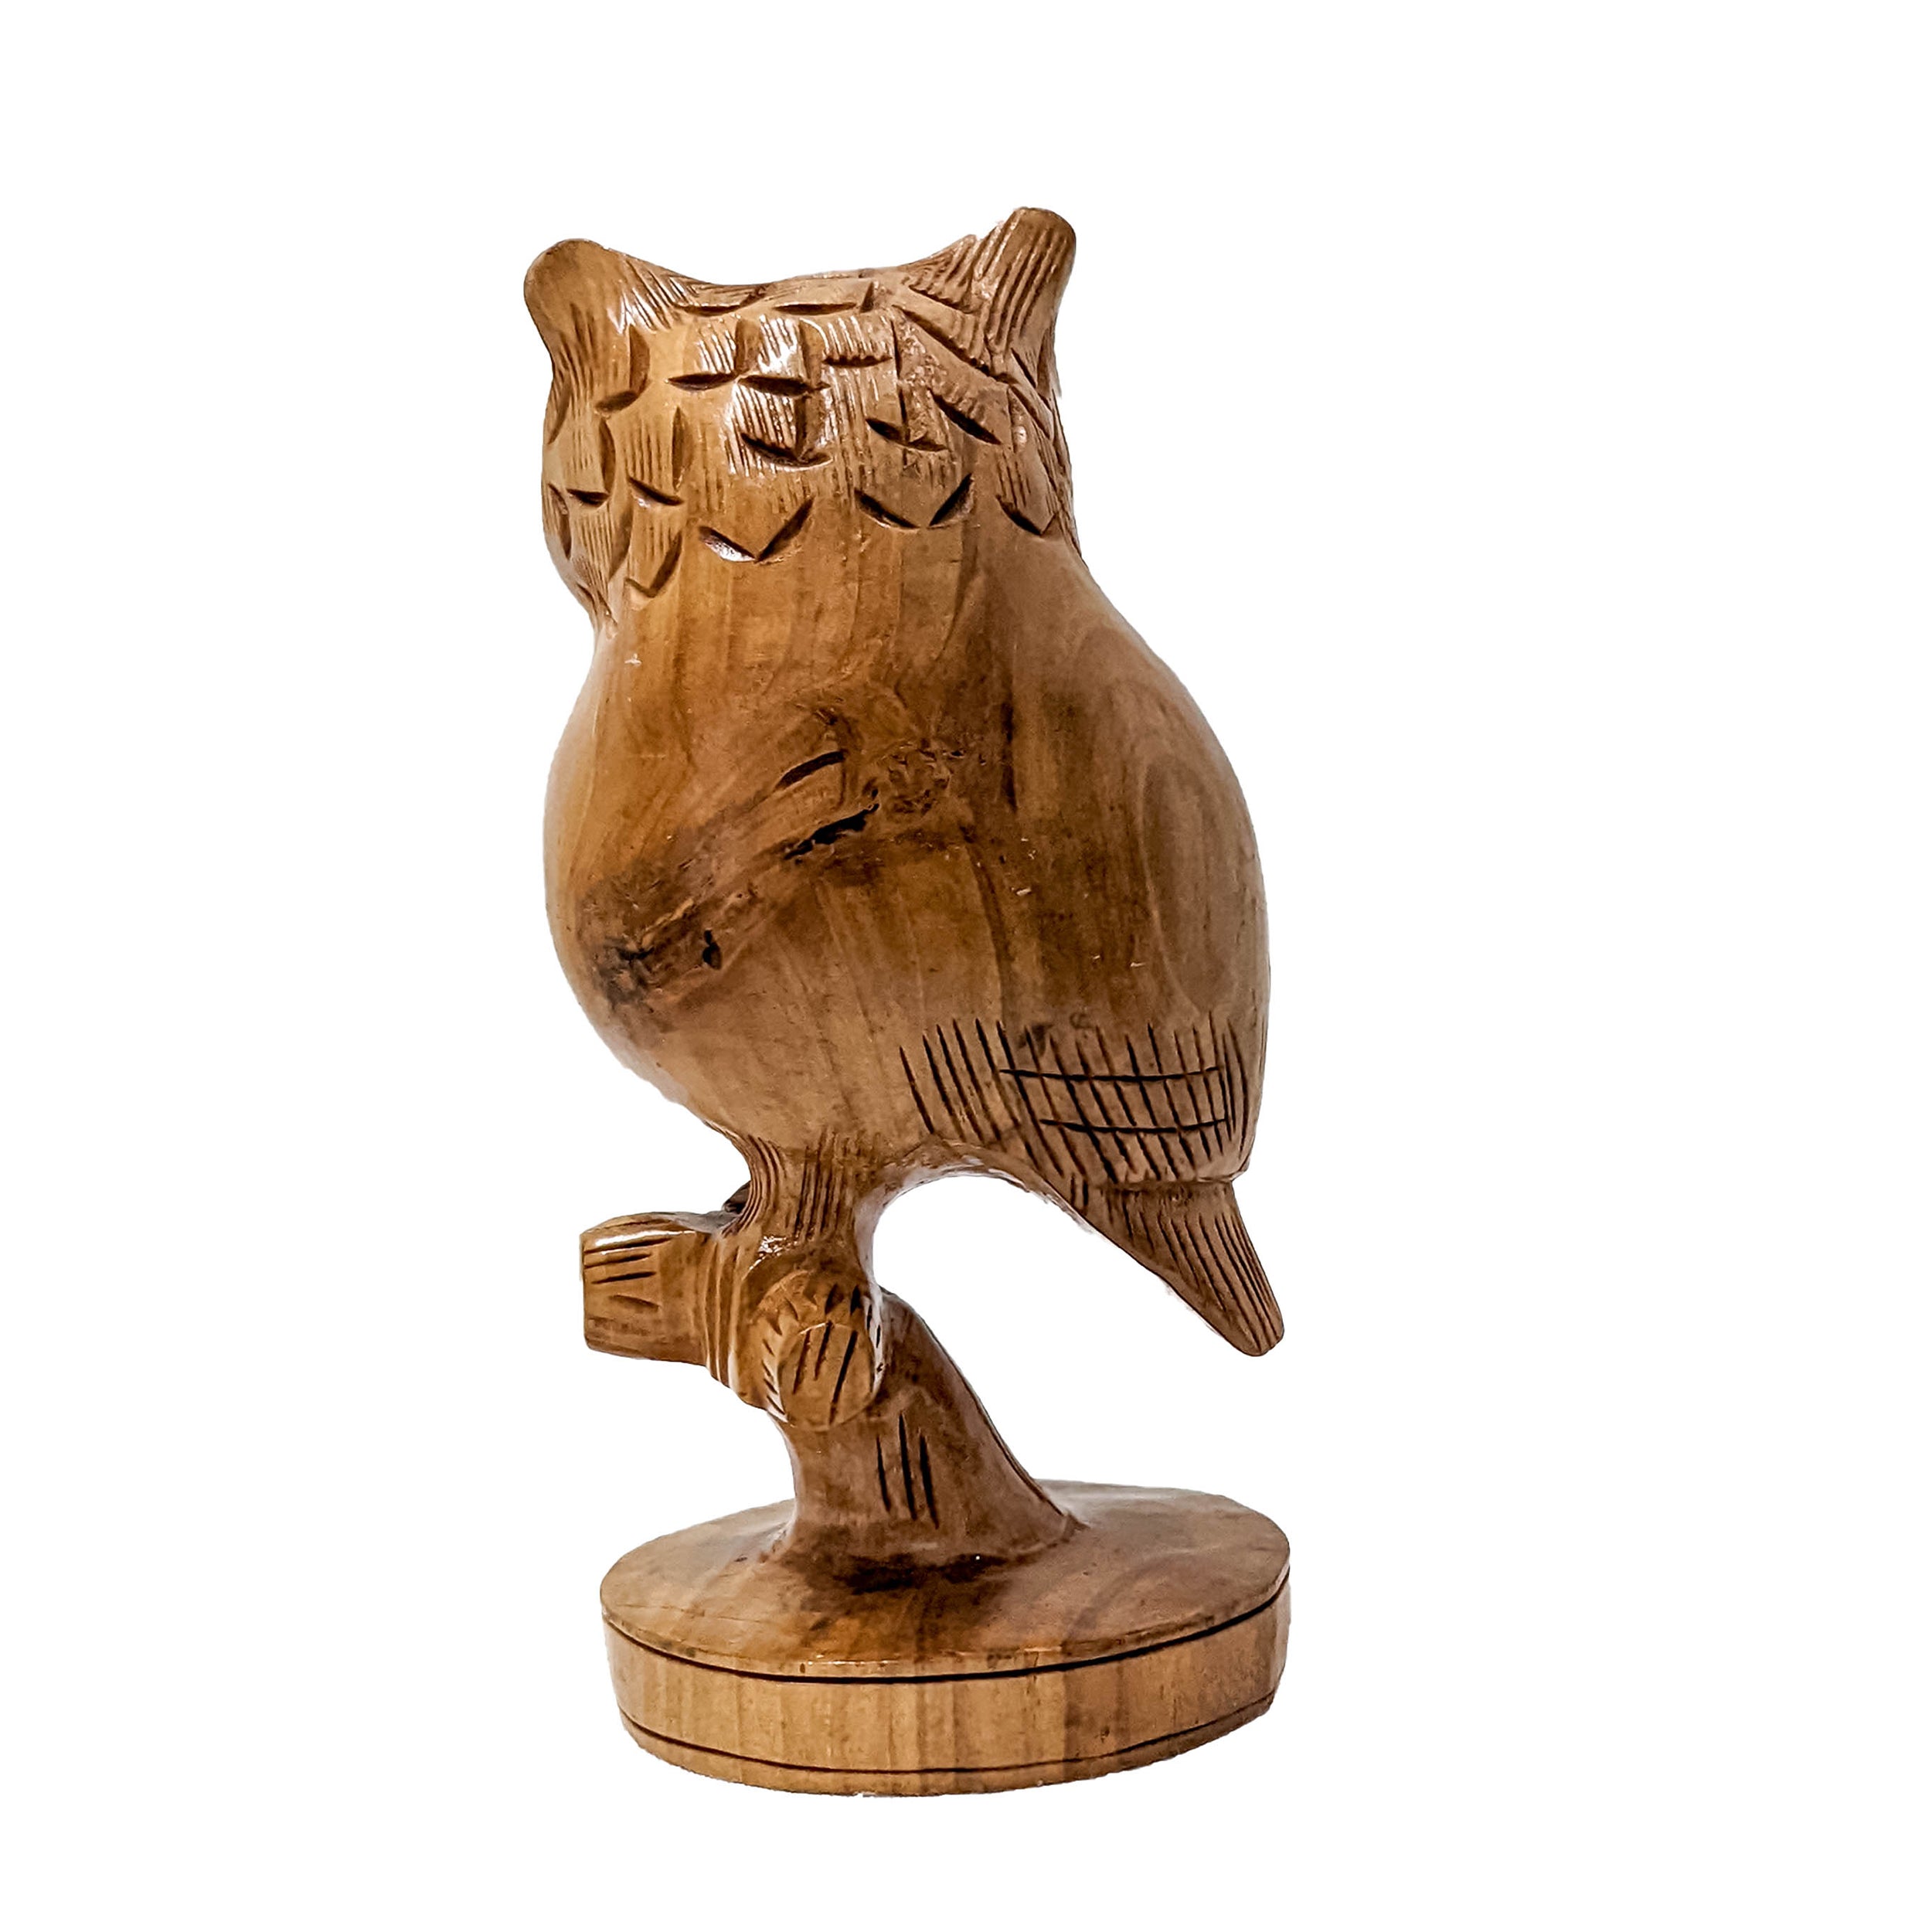 Wooden Big Stone Owl Statue